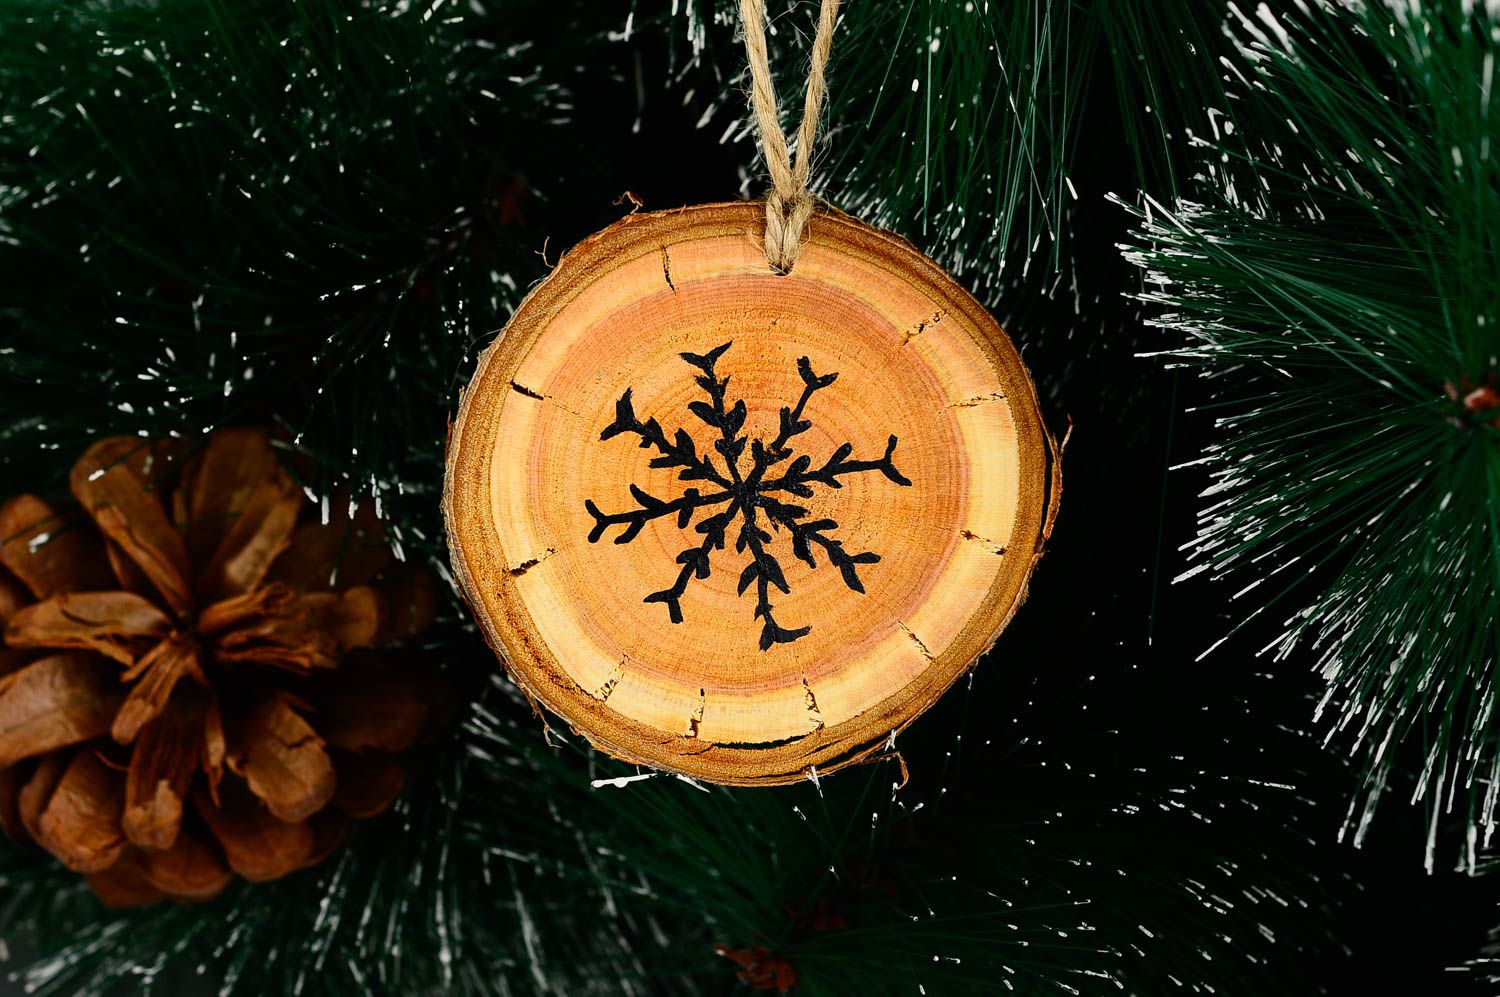 Wooden Christmas tree toy handmade decor ideas home decor decorative use only photo 1